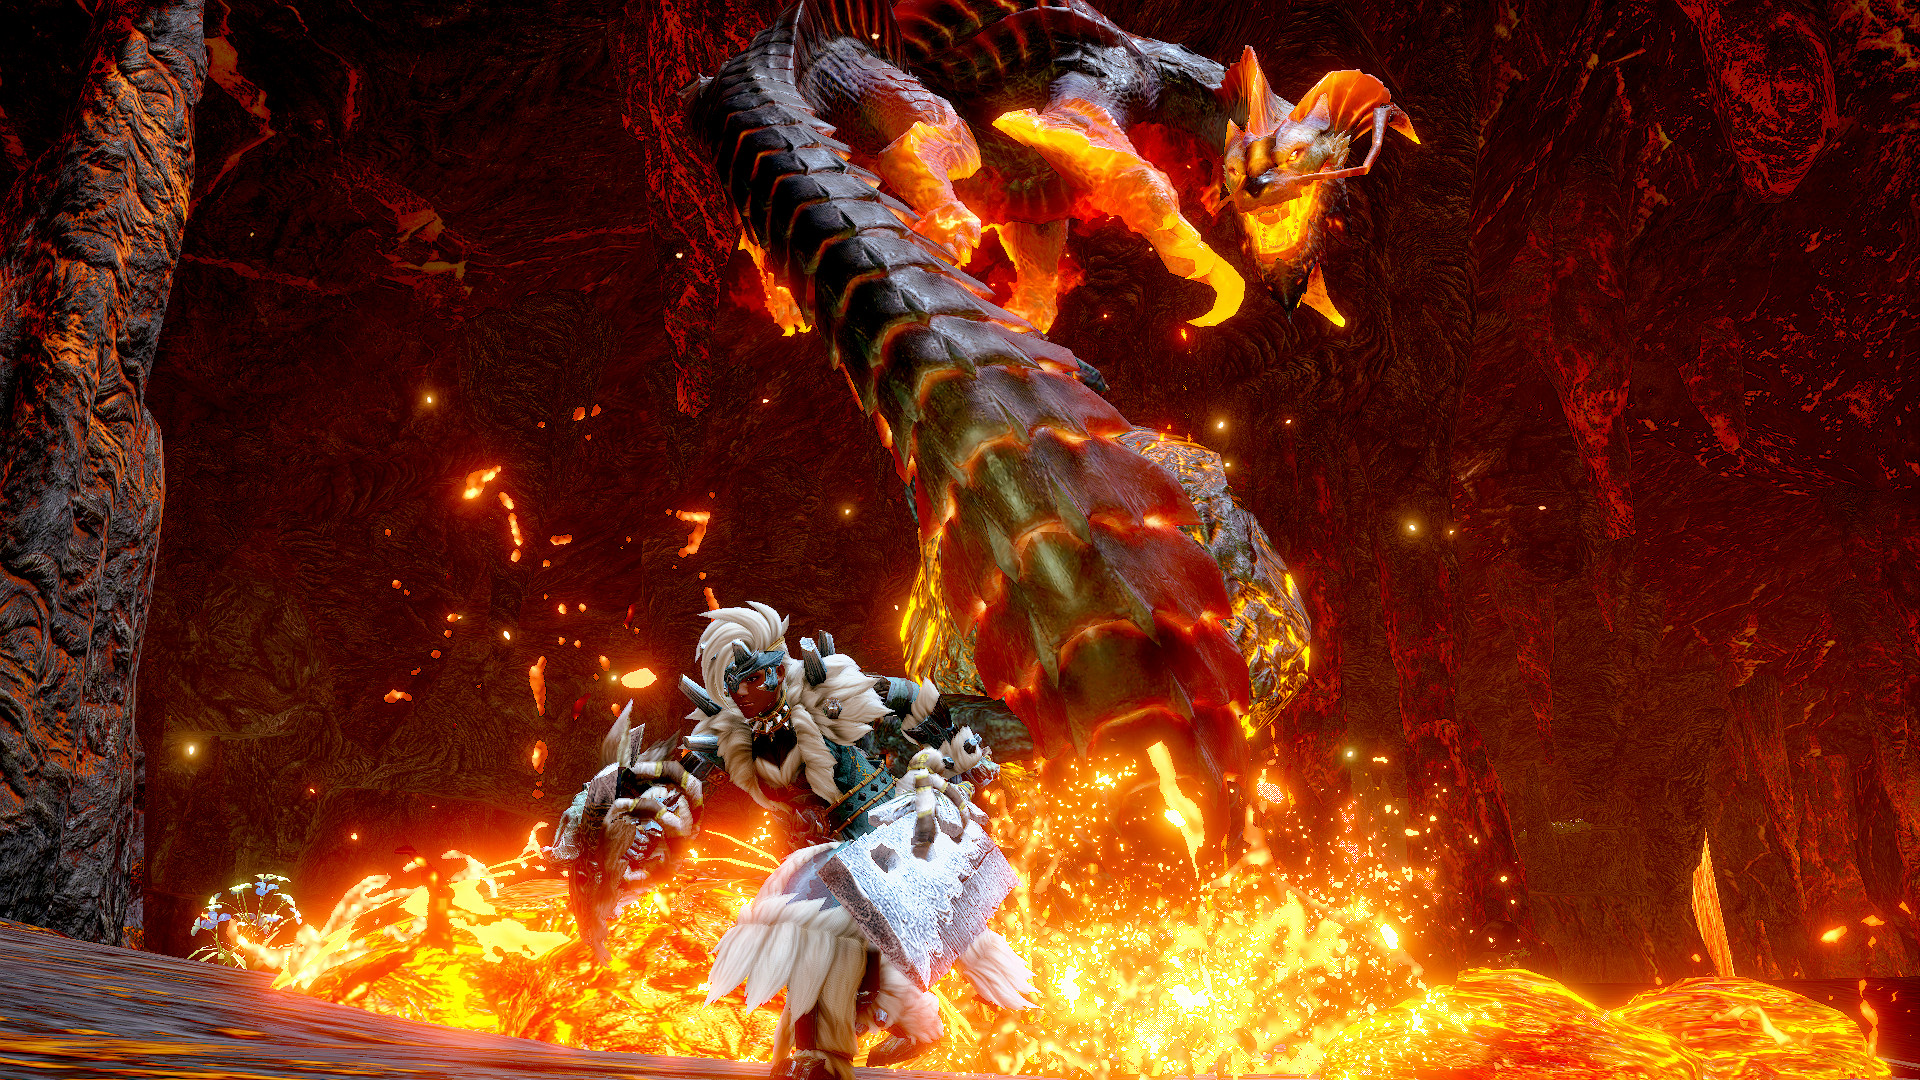 Monster Hunter Rise: Sunbreak New Gameplay Footage Showcases